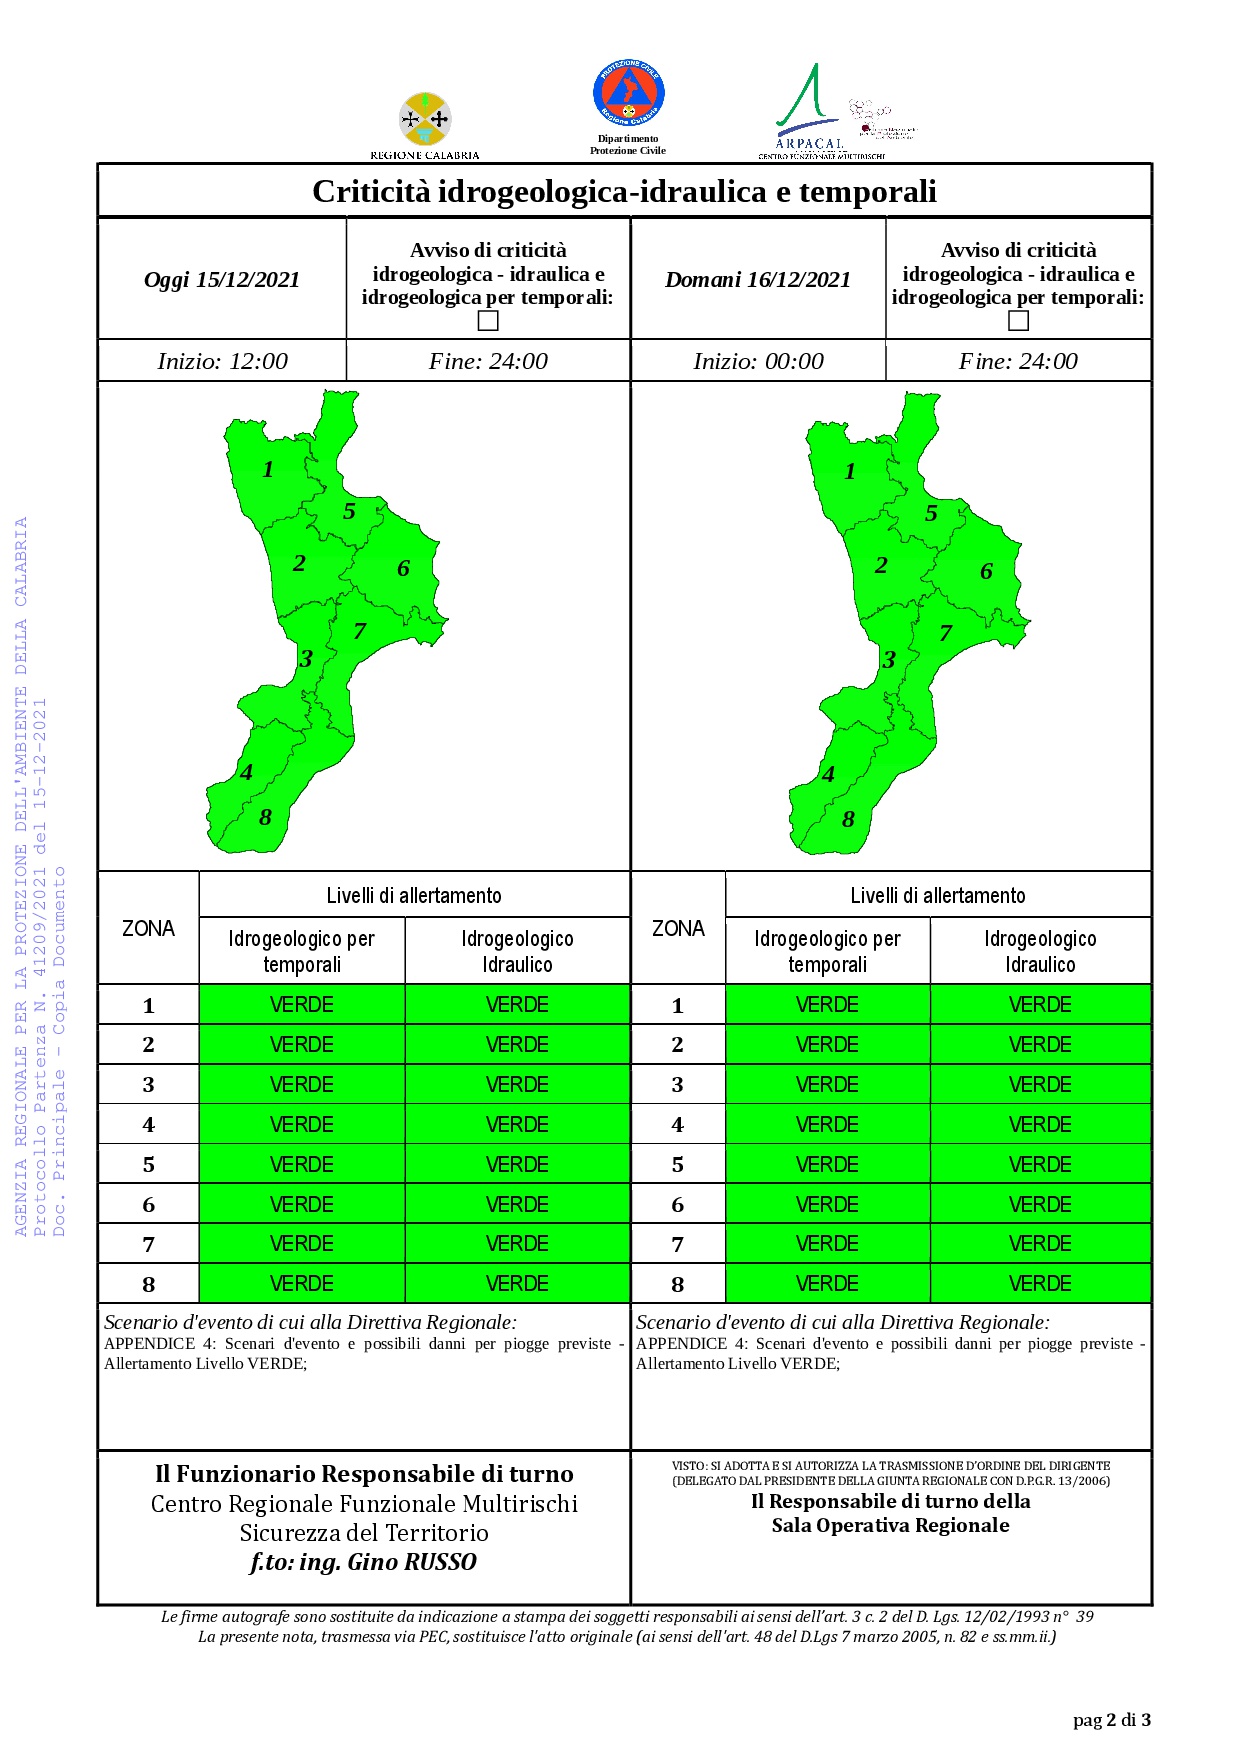 Criticità idrogeologica-idraulica e temporali in Calabria 15-12-2021